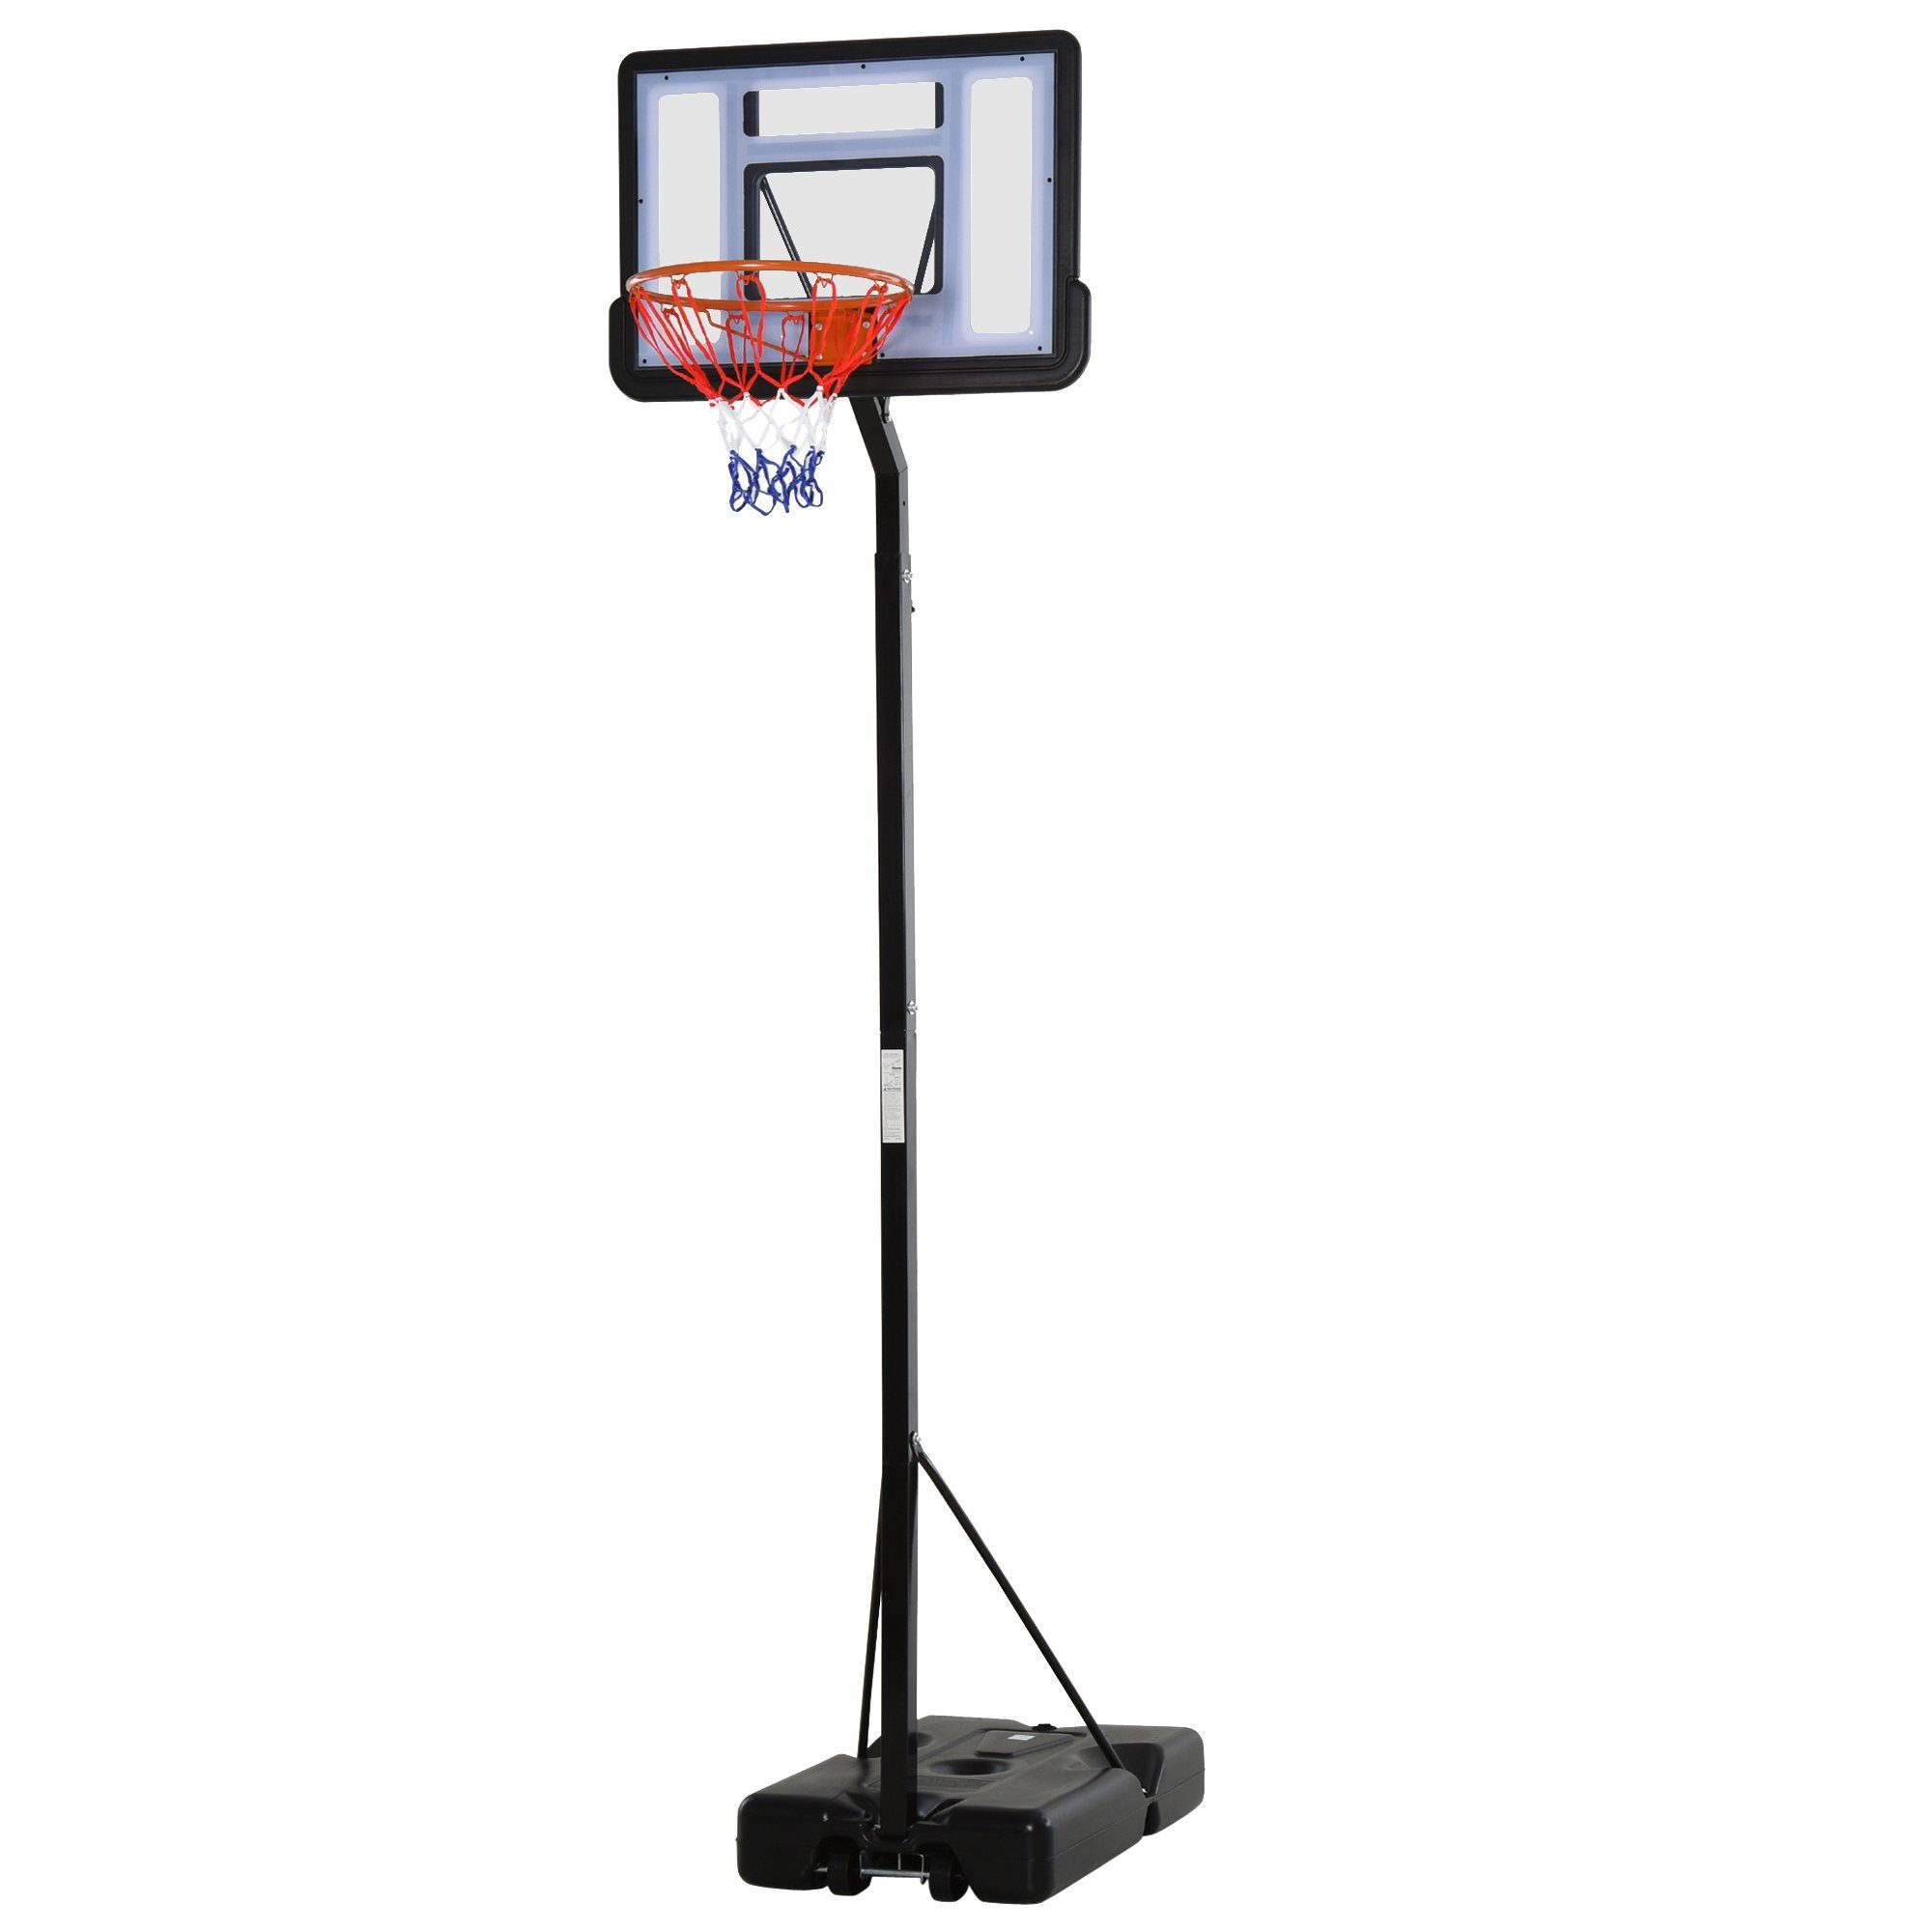 HOMCOM Basketballständer Basketballkorb 2 Rädern mit